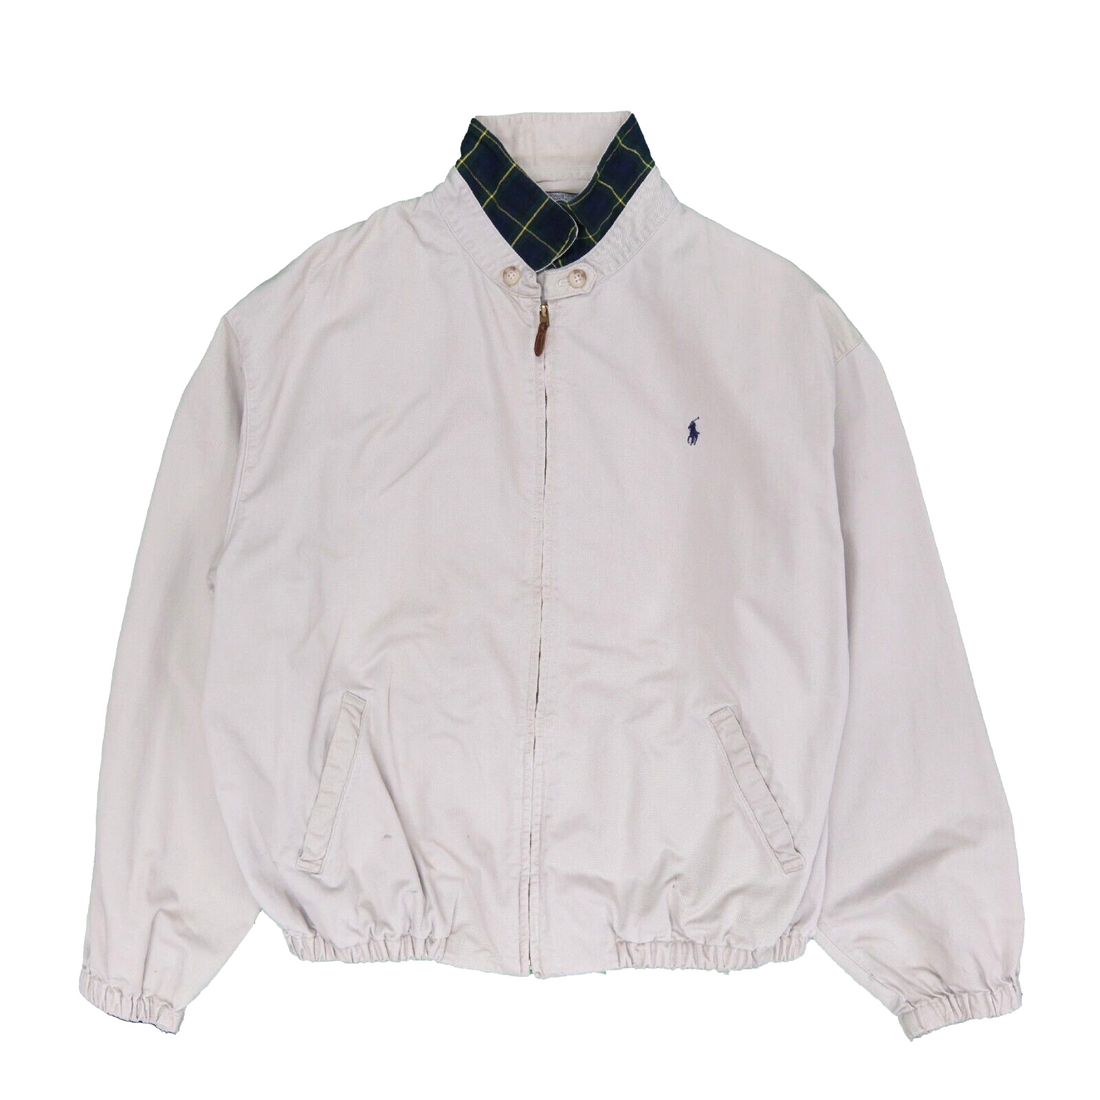 Vintage Polo Ralph Lauren Harrington Light Jacket Size XL Beige